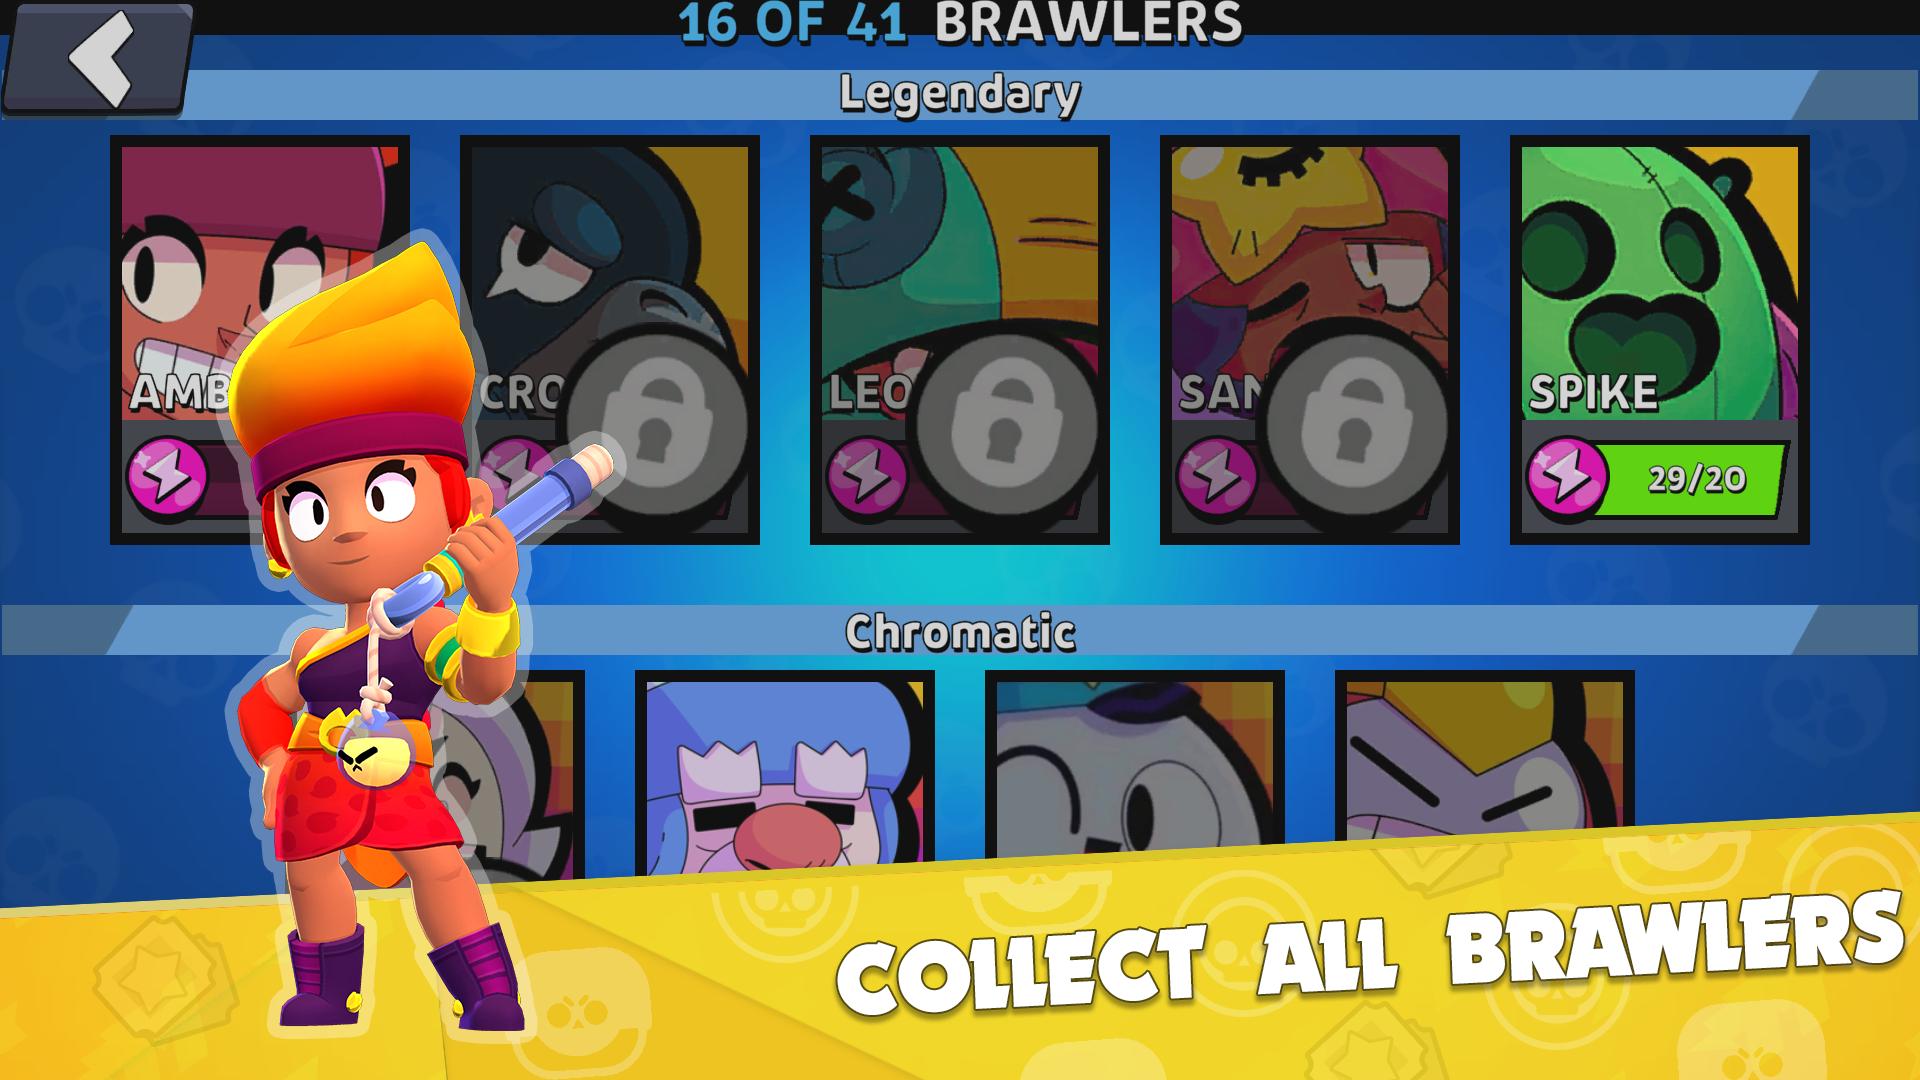 Box Simulator For Brawl Stars For Android Apk Download - brawl stars background brawler box